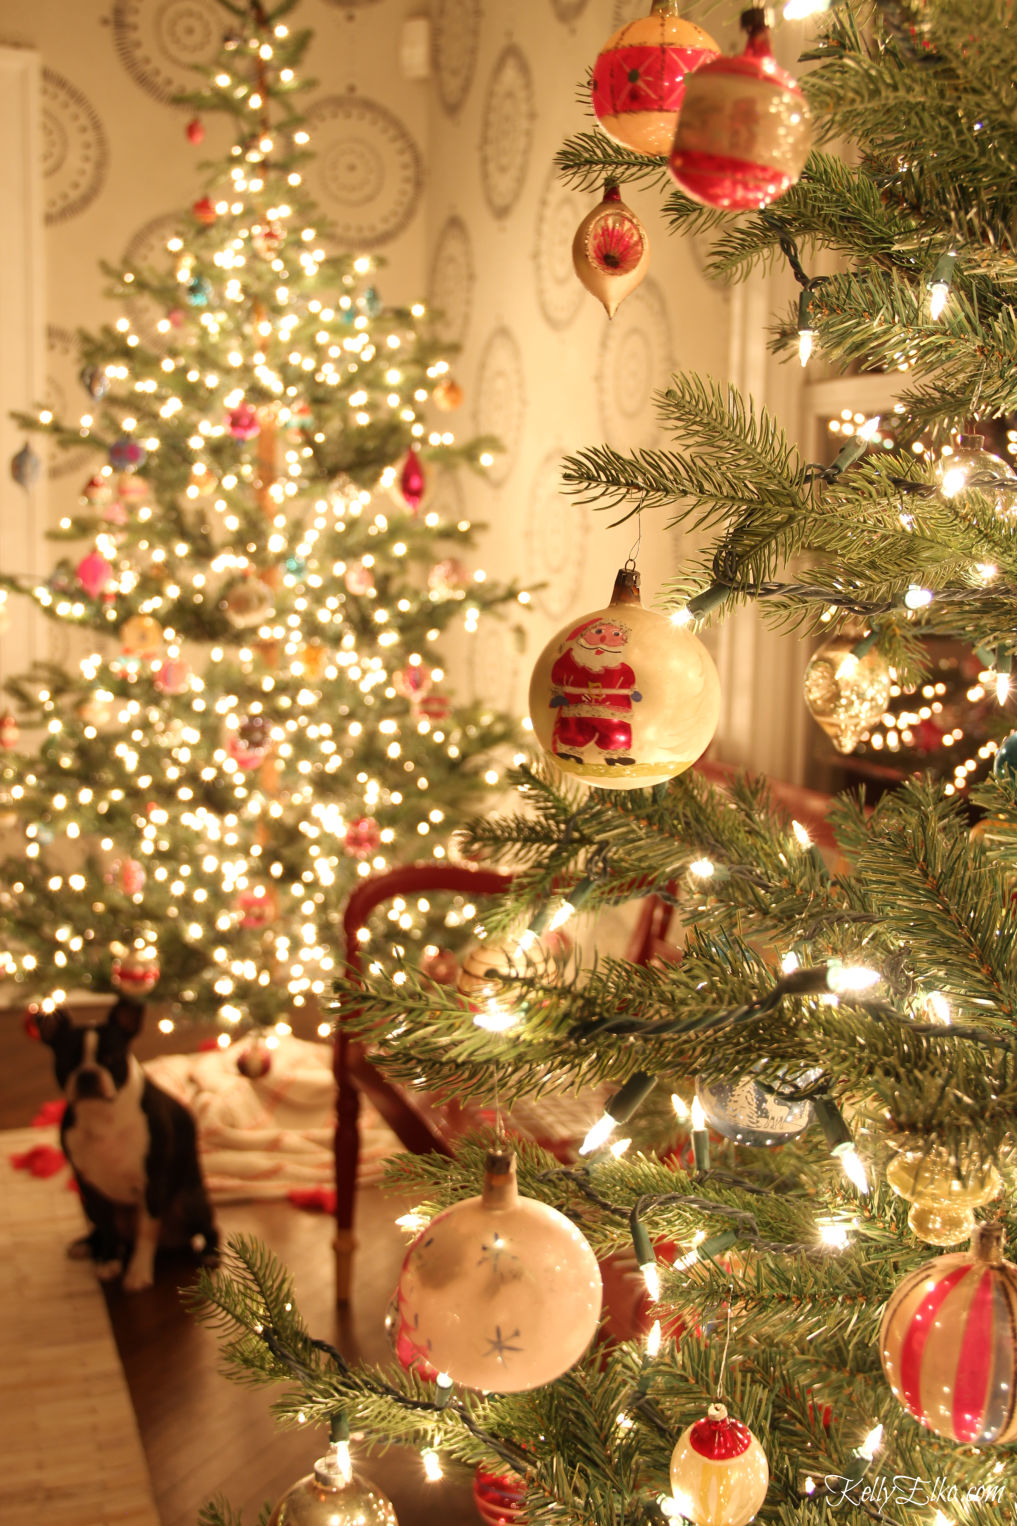 Christmas night tour kellyelko.com #christmas #christmasdecor #vintagechritmas #shinybrites #ornaments #christmastrees #christmasdecorating #kellyelko